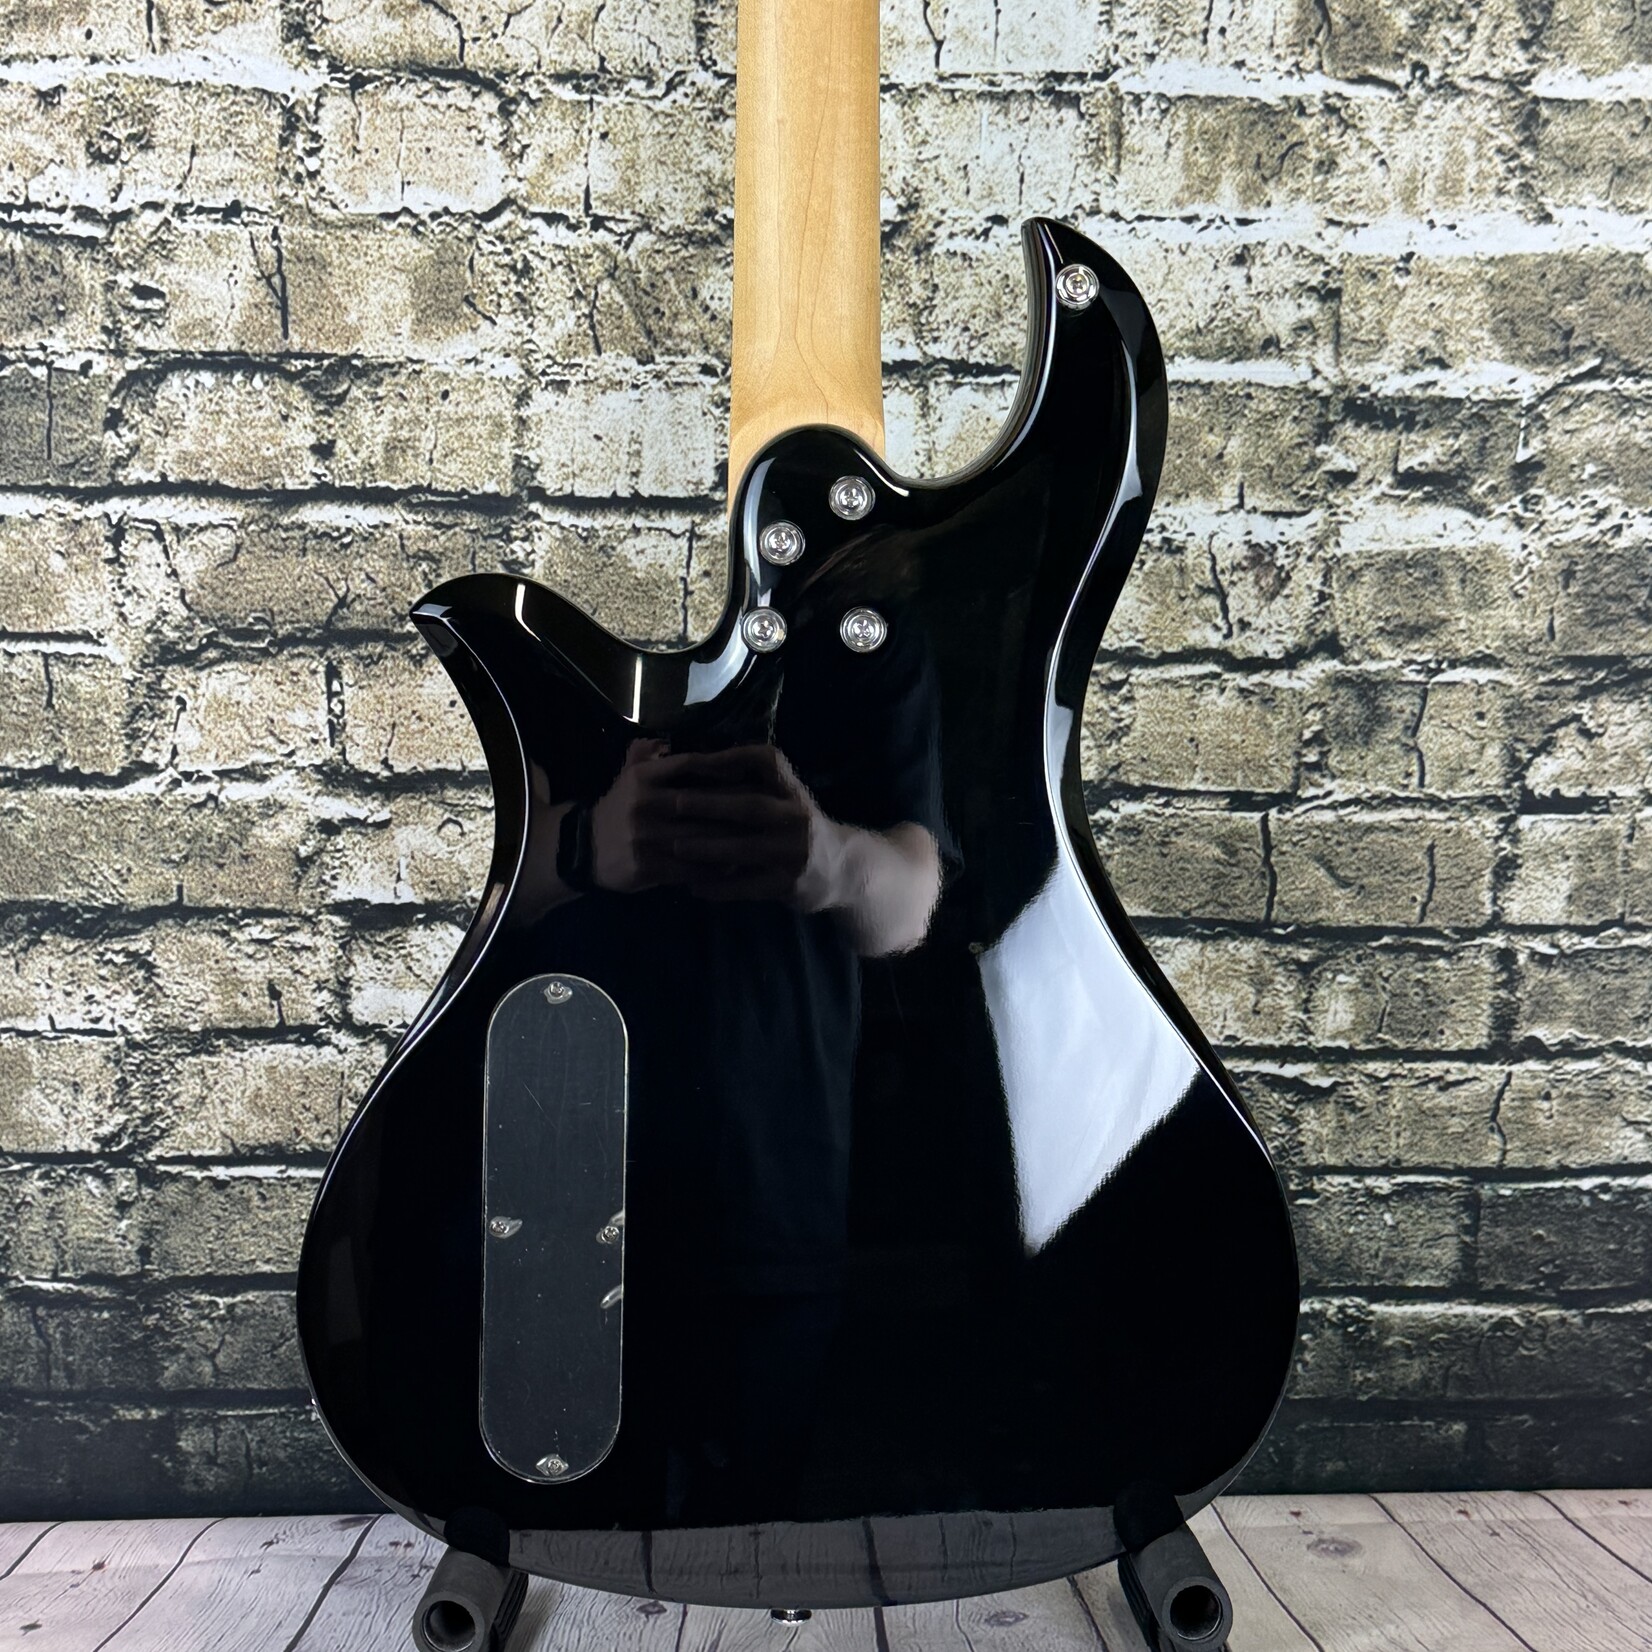 B.C. Rich Eagle 1 Electric Guitar - Black (Used)